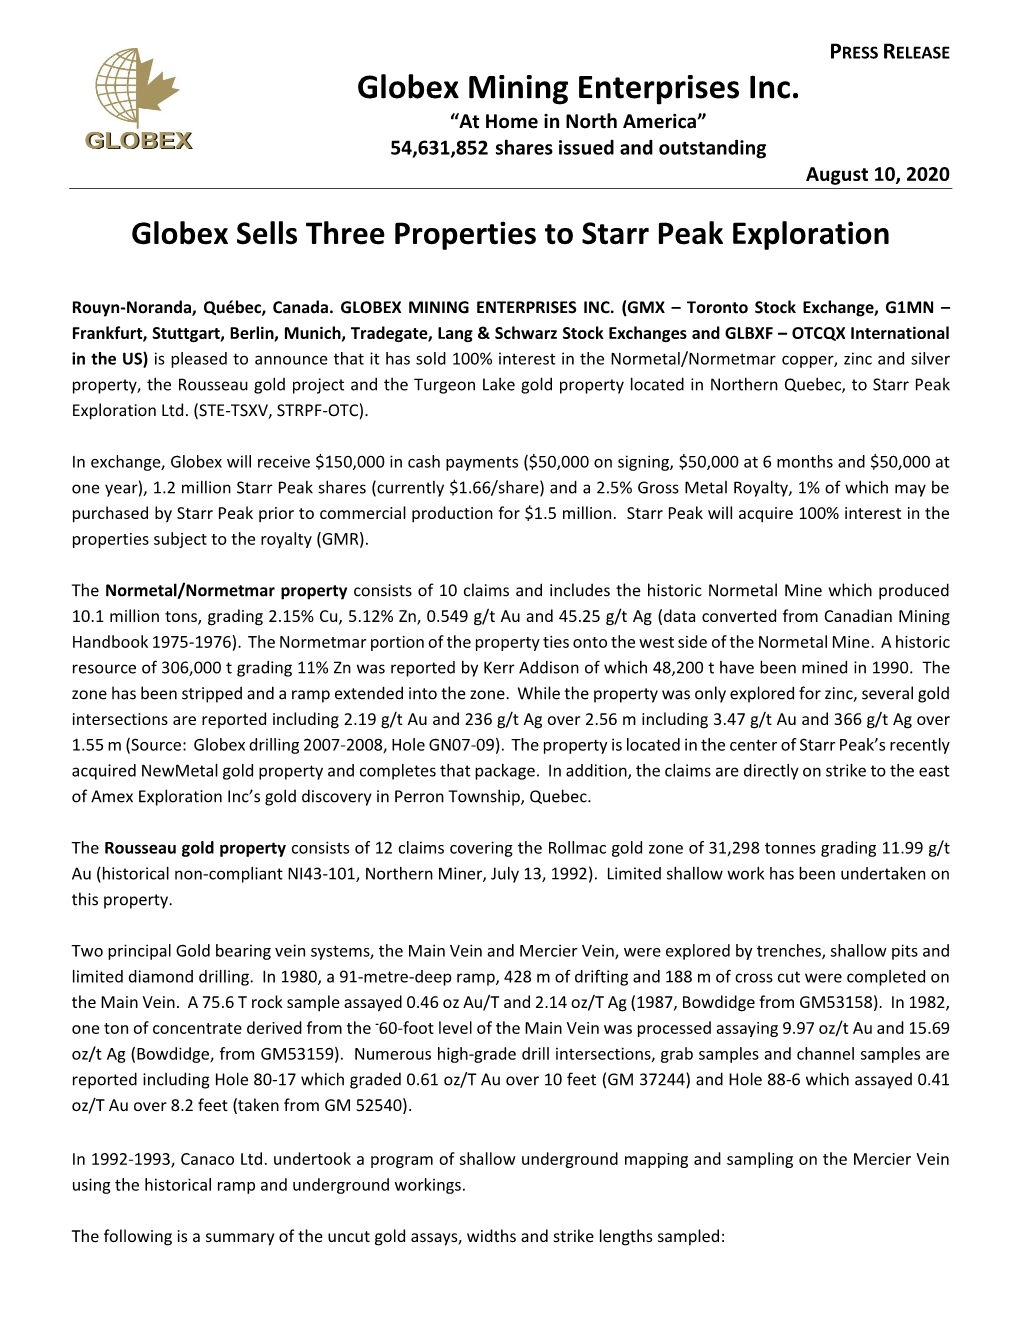 Globex Sells Three Properties to Starr Peak Exploration